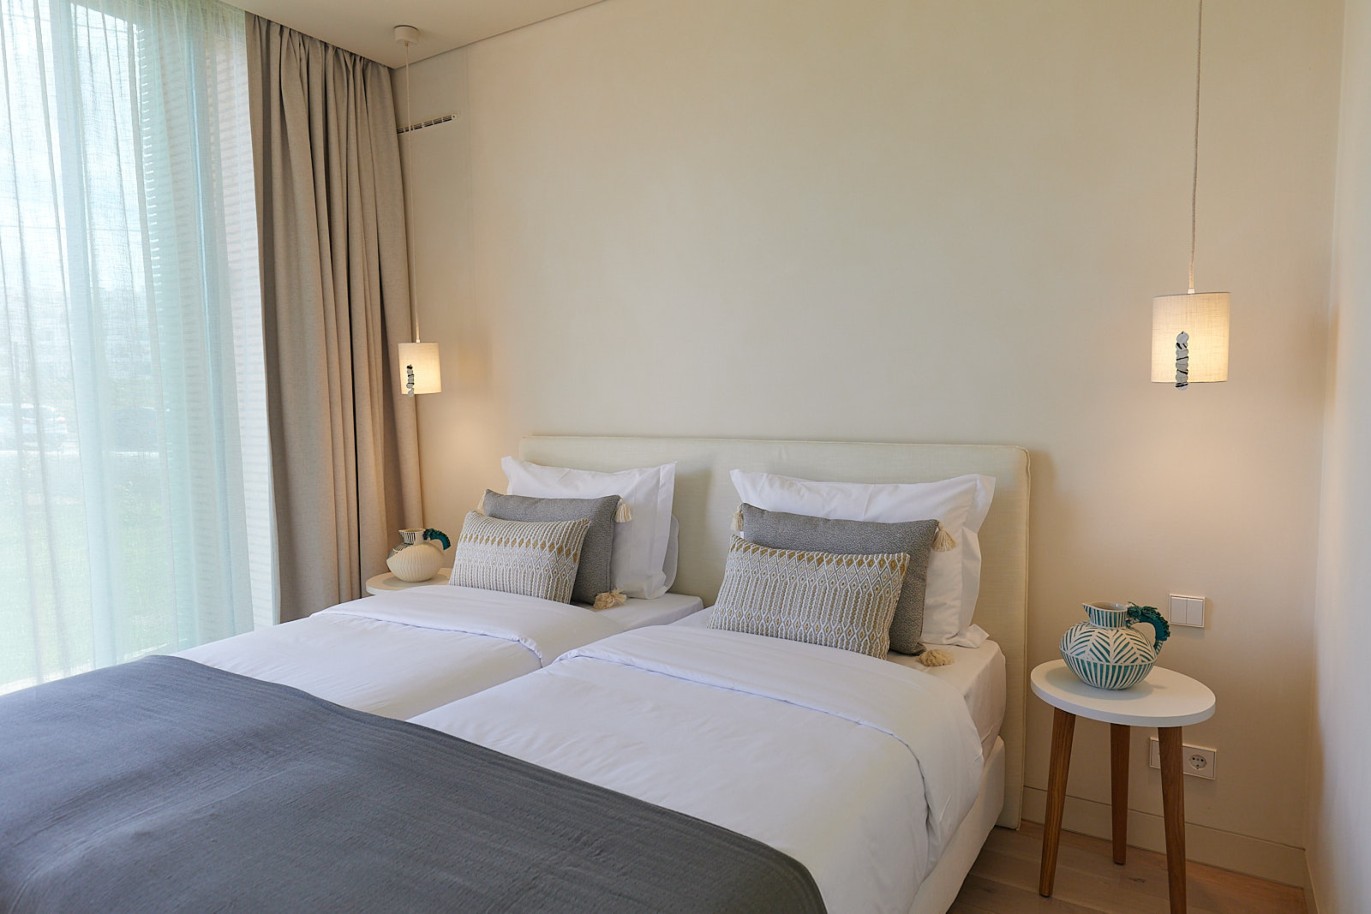 2 bedroom apartment in resort, for sale in Porches, Algarve_228723